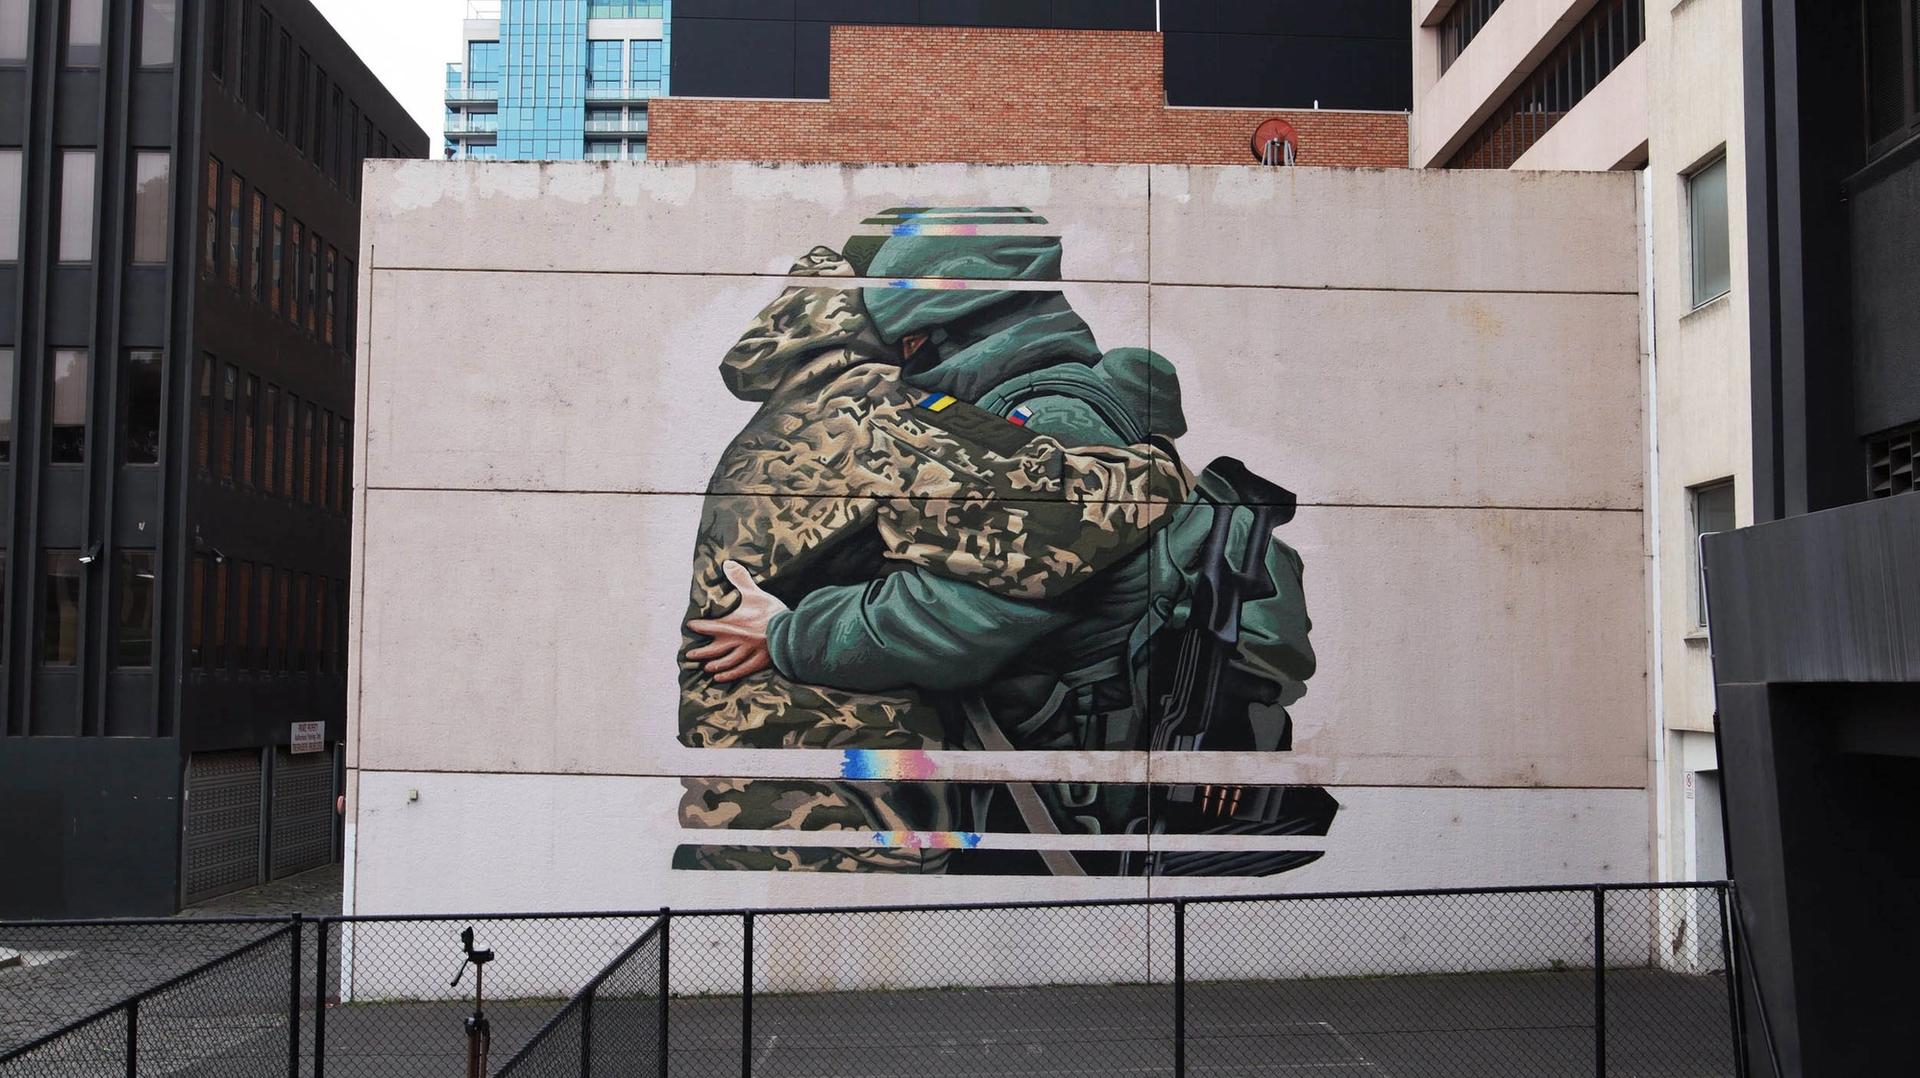 No love lost: Peter Seaton’s mural Peace Before Pieces, described as “Russian propaganda”, caused outrage in Australia Courtesy Peter Seaton / CTOArt